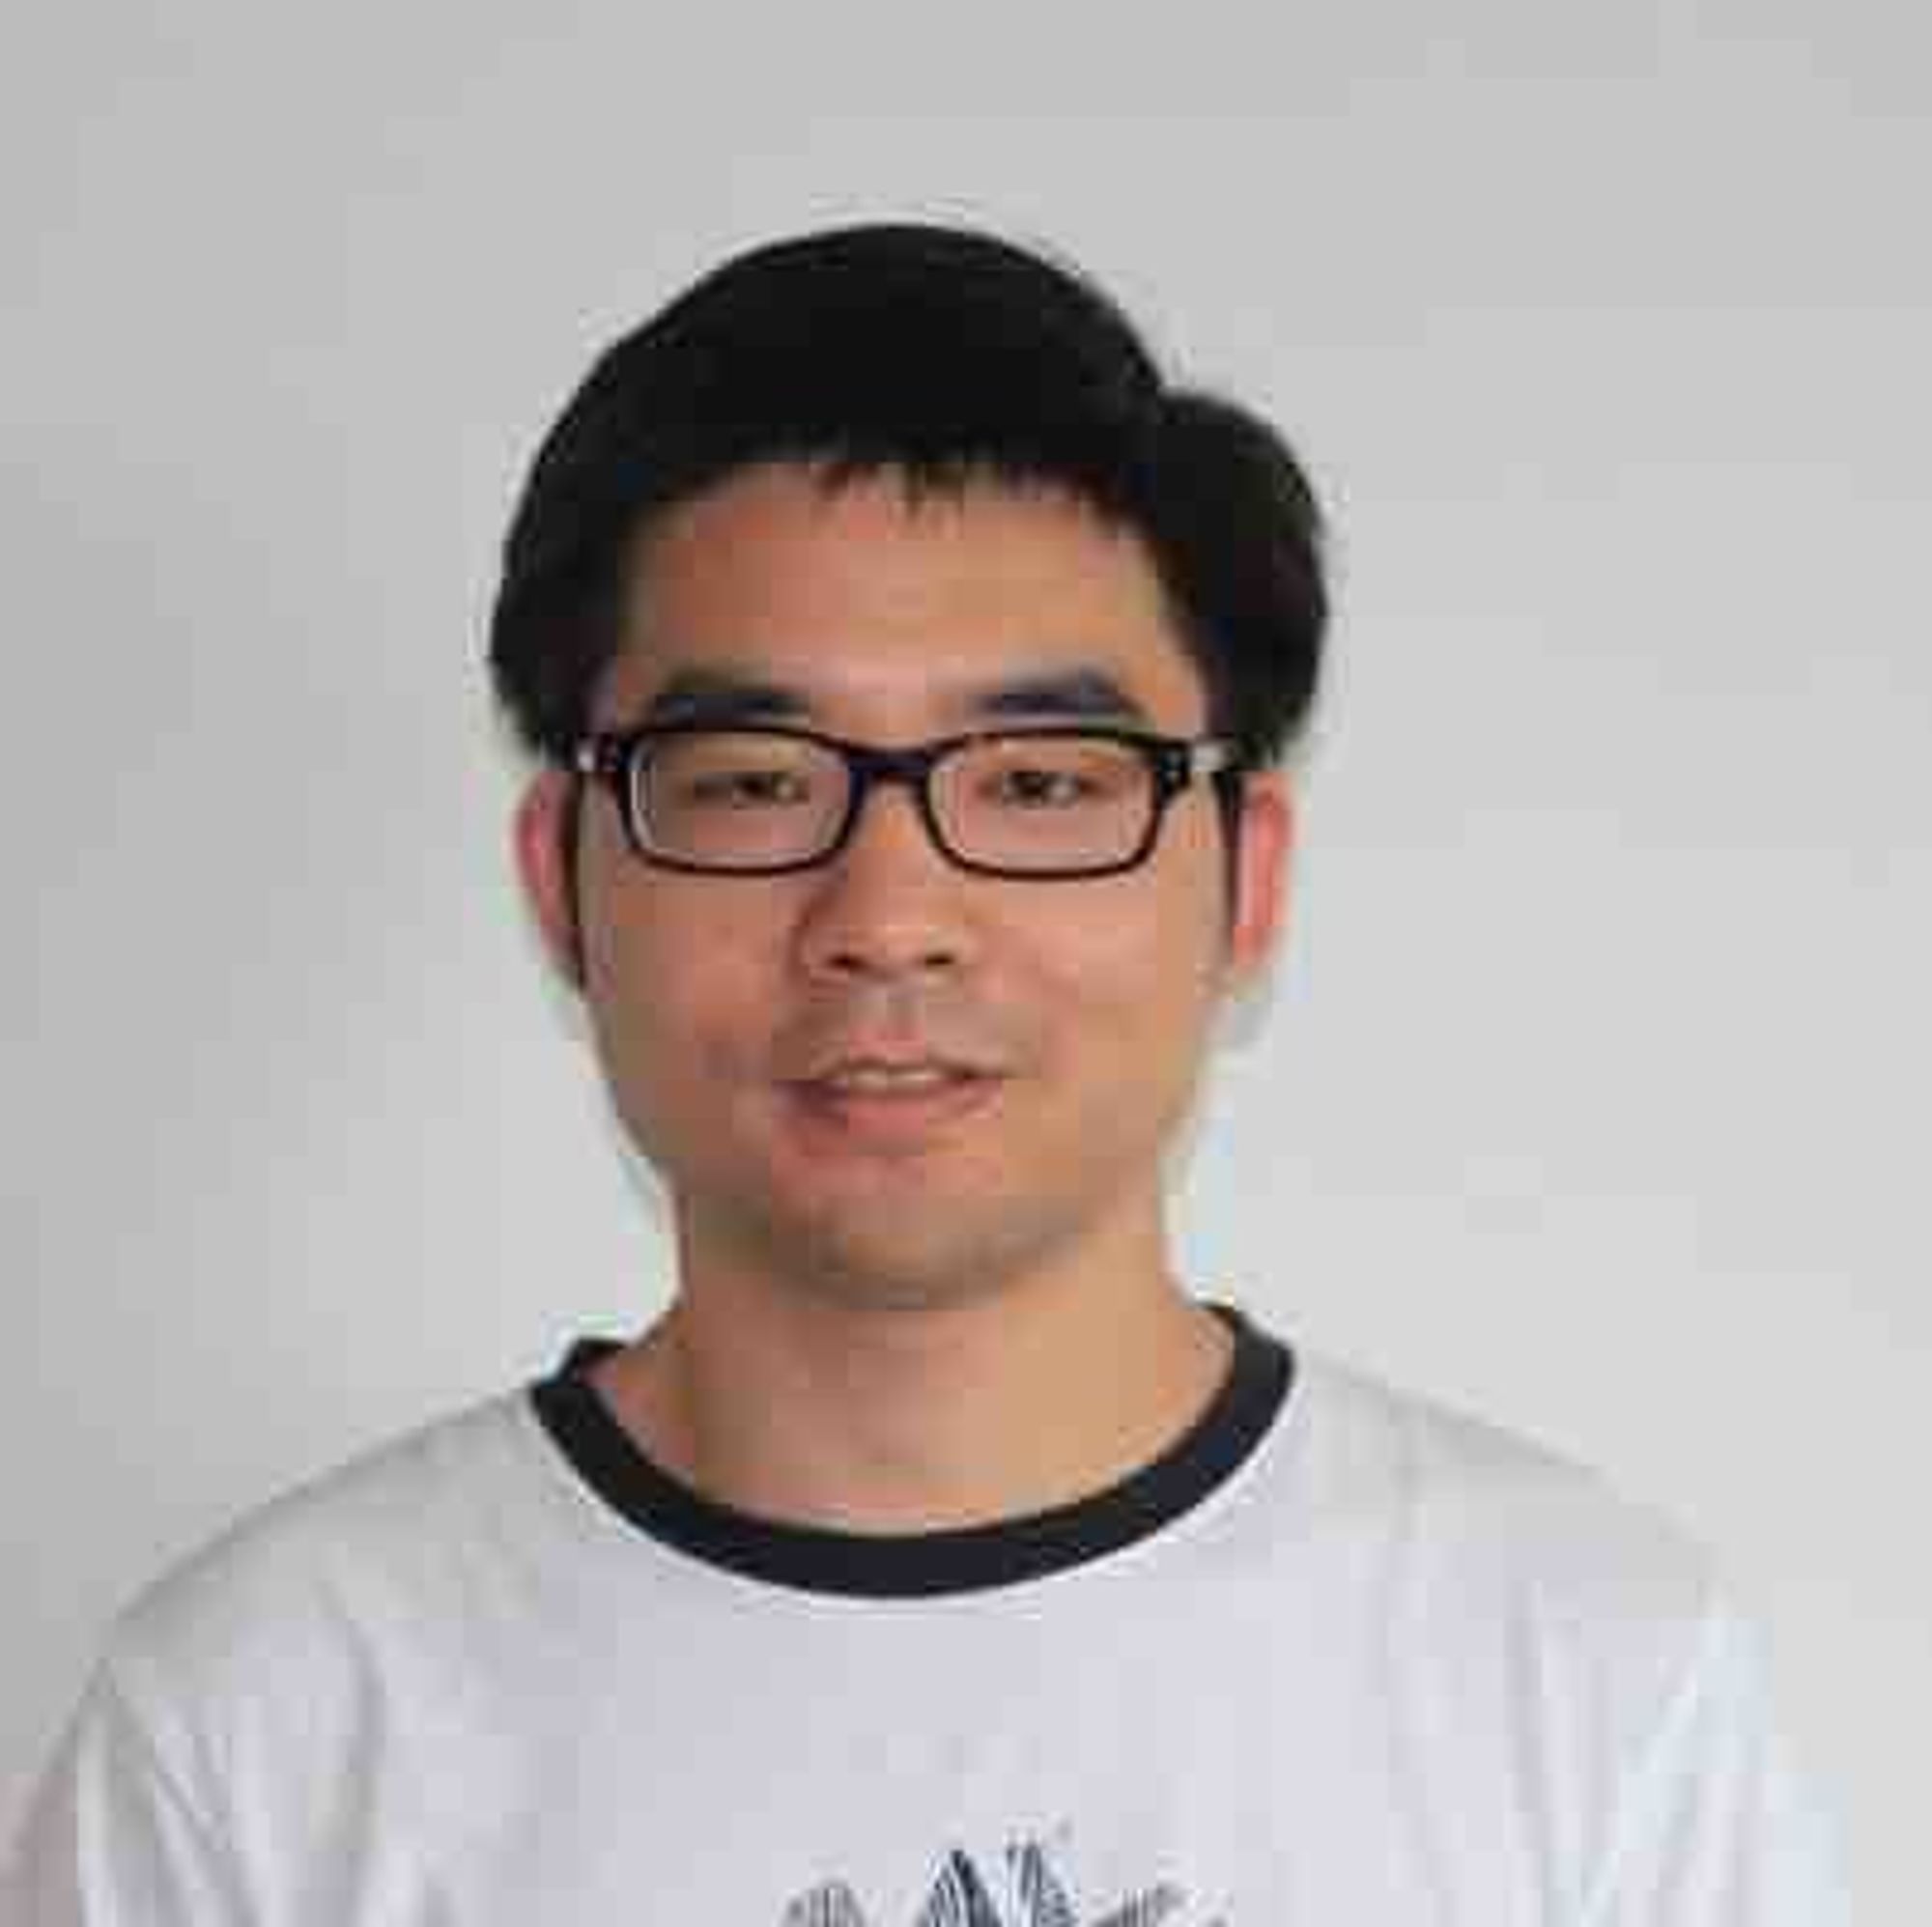 Leo Yang
Software Engineer
Prior software engineer at Amazon